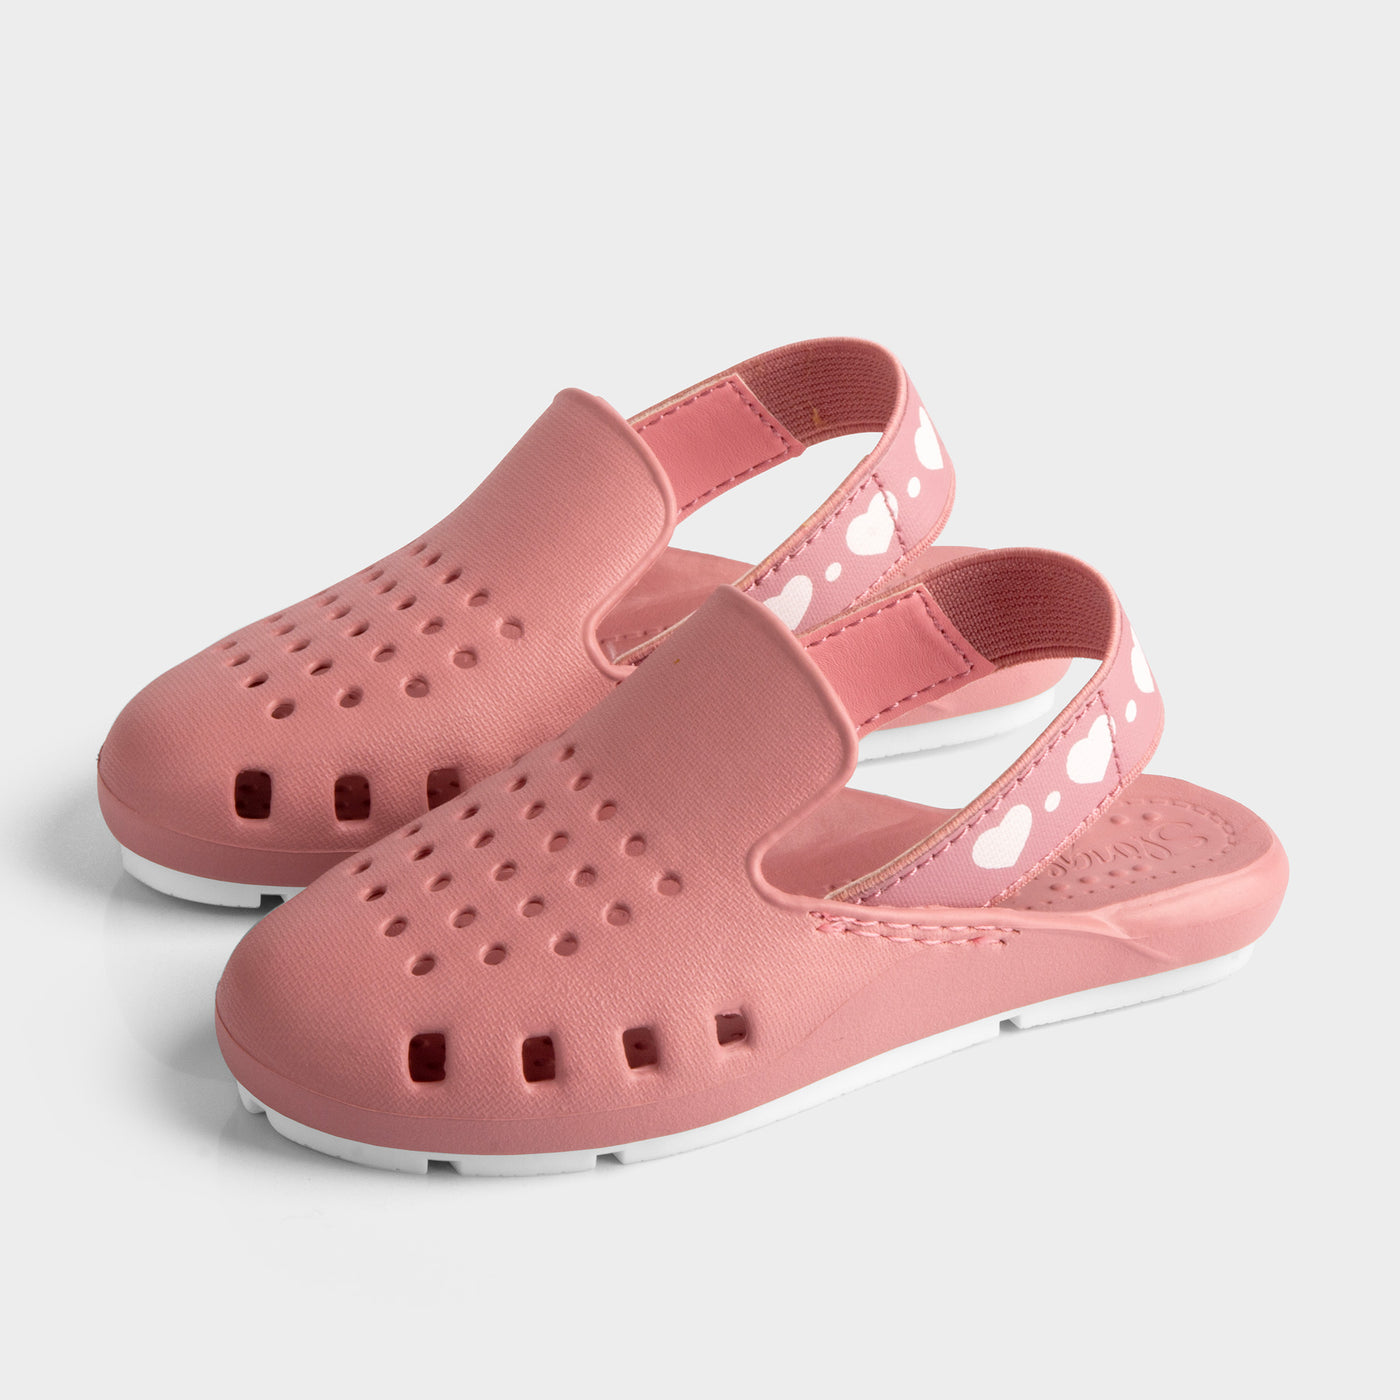 Pink crocs style water shoes for girls. slide/sandal with elastic back slingback.